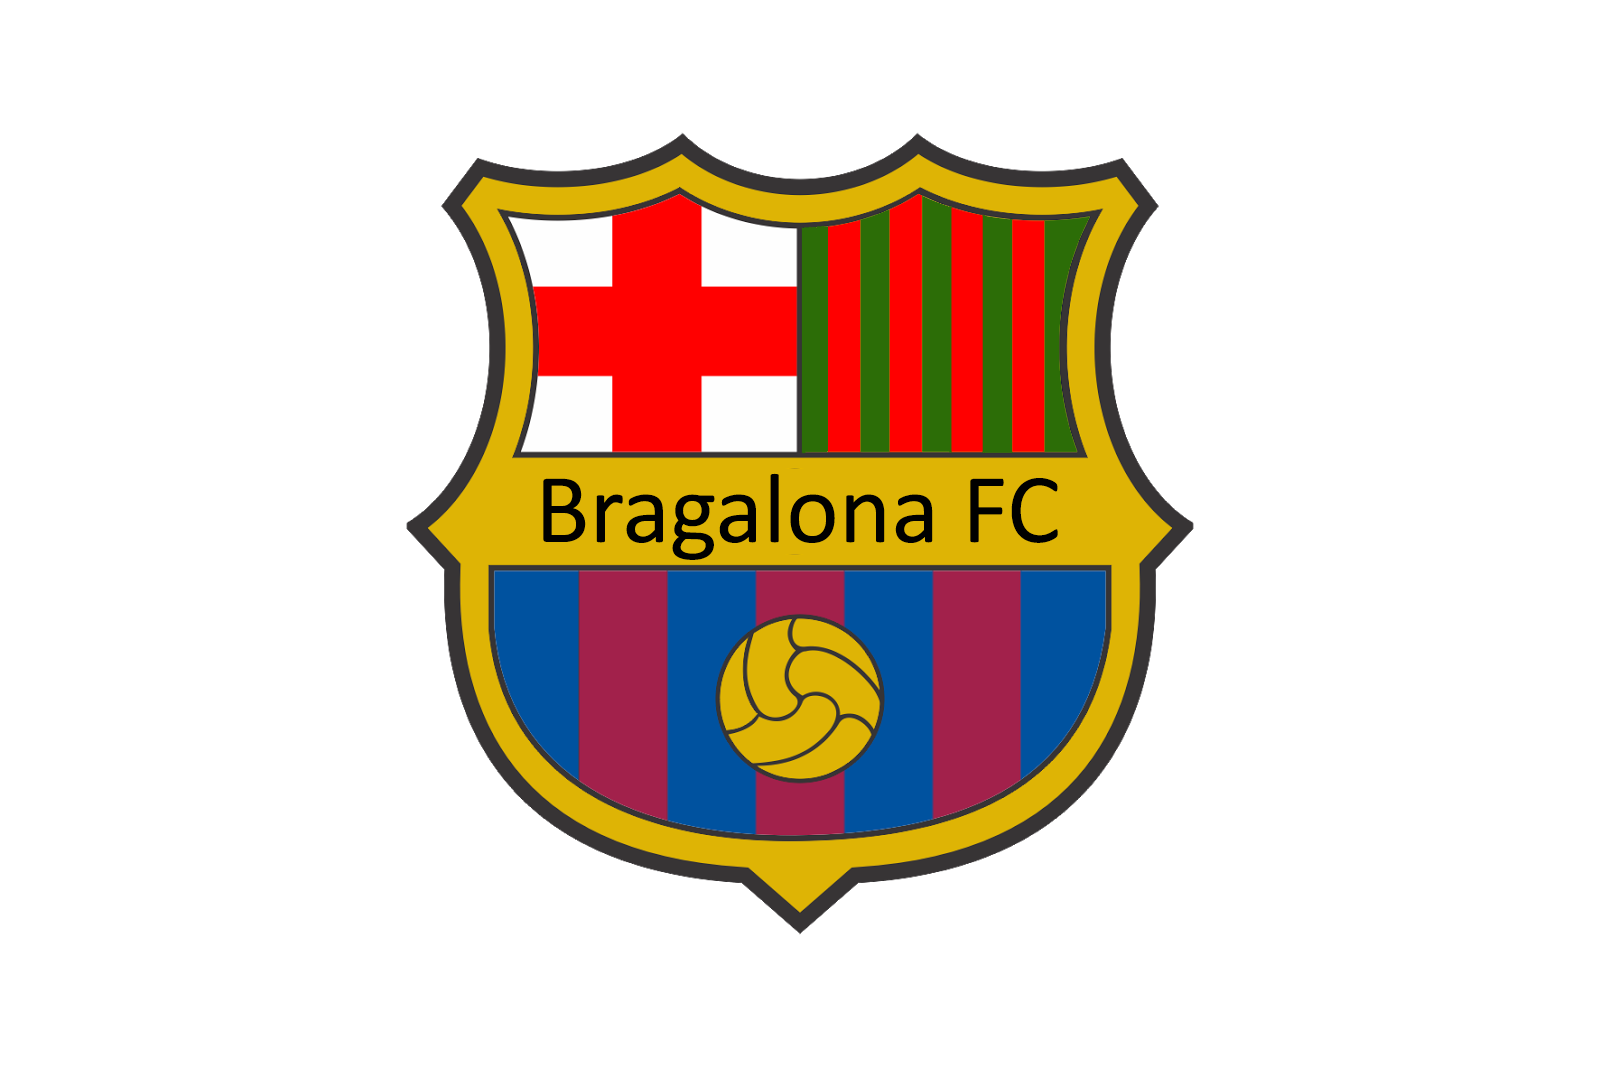 Bragalona FC